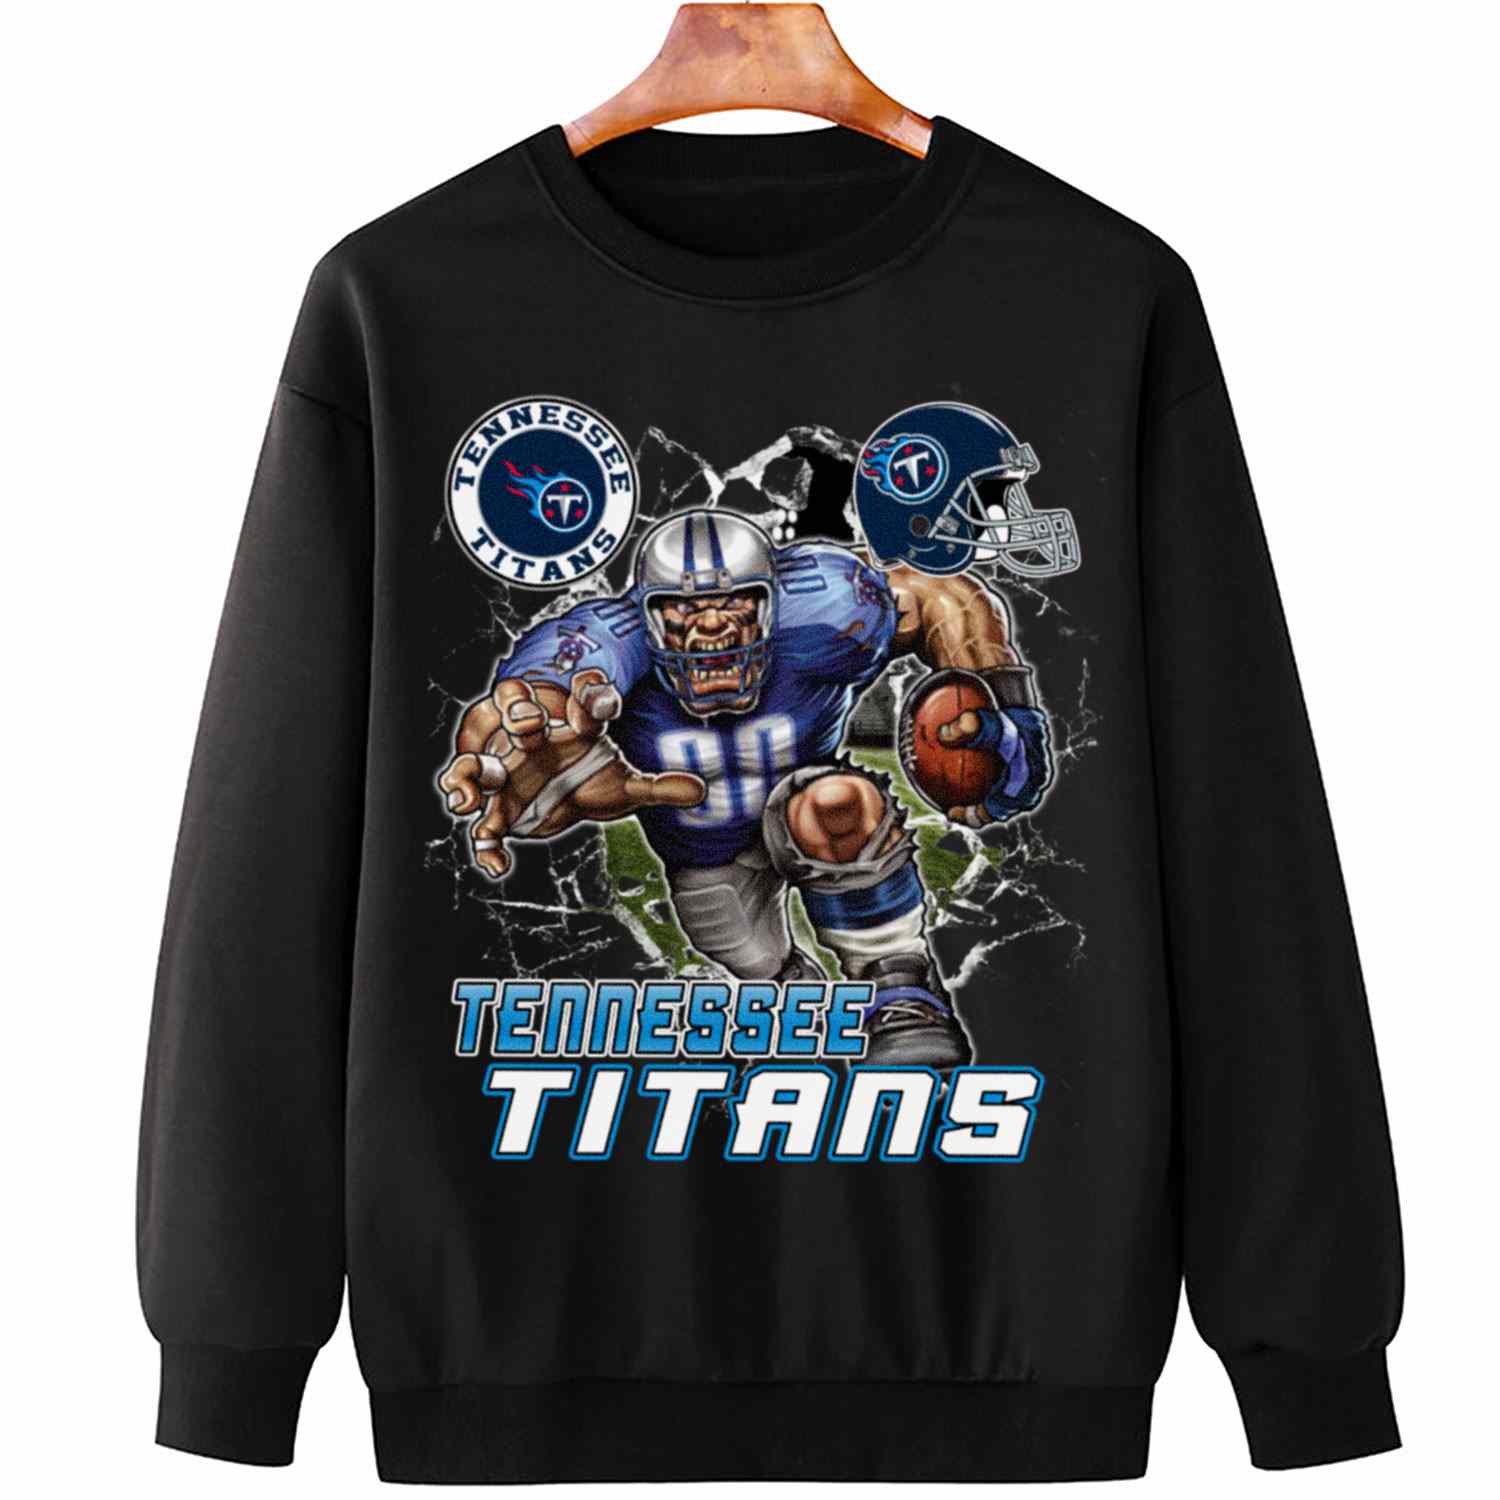 Mascot Breaking Through Wall Tennessee Titans T-Shirt